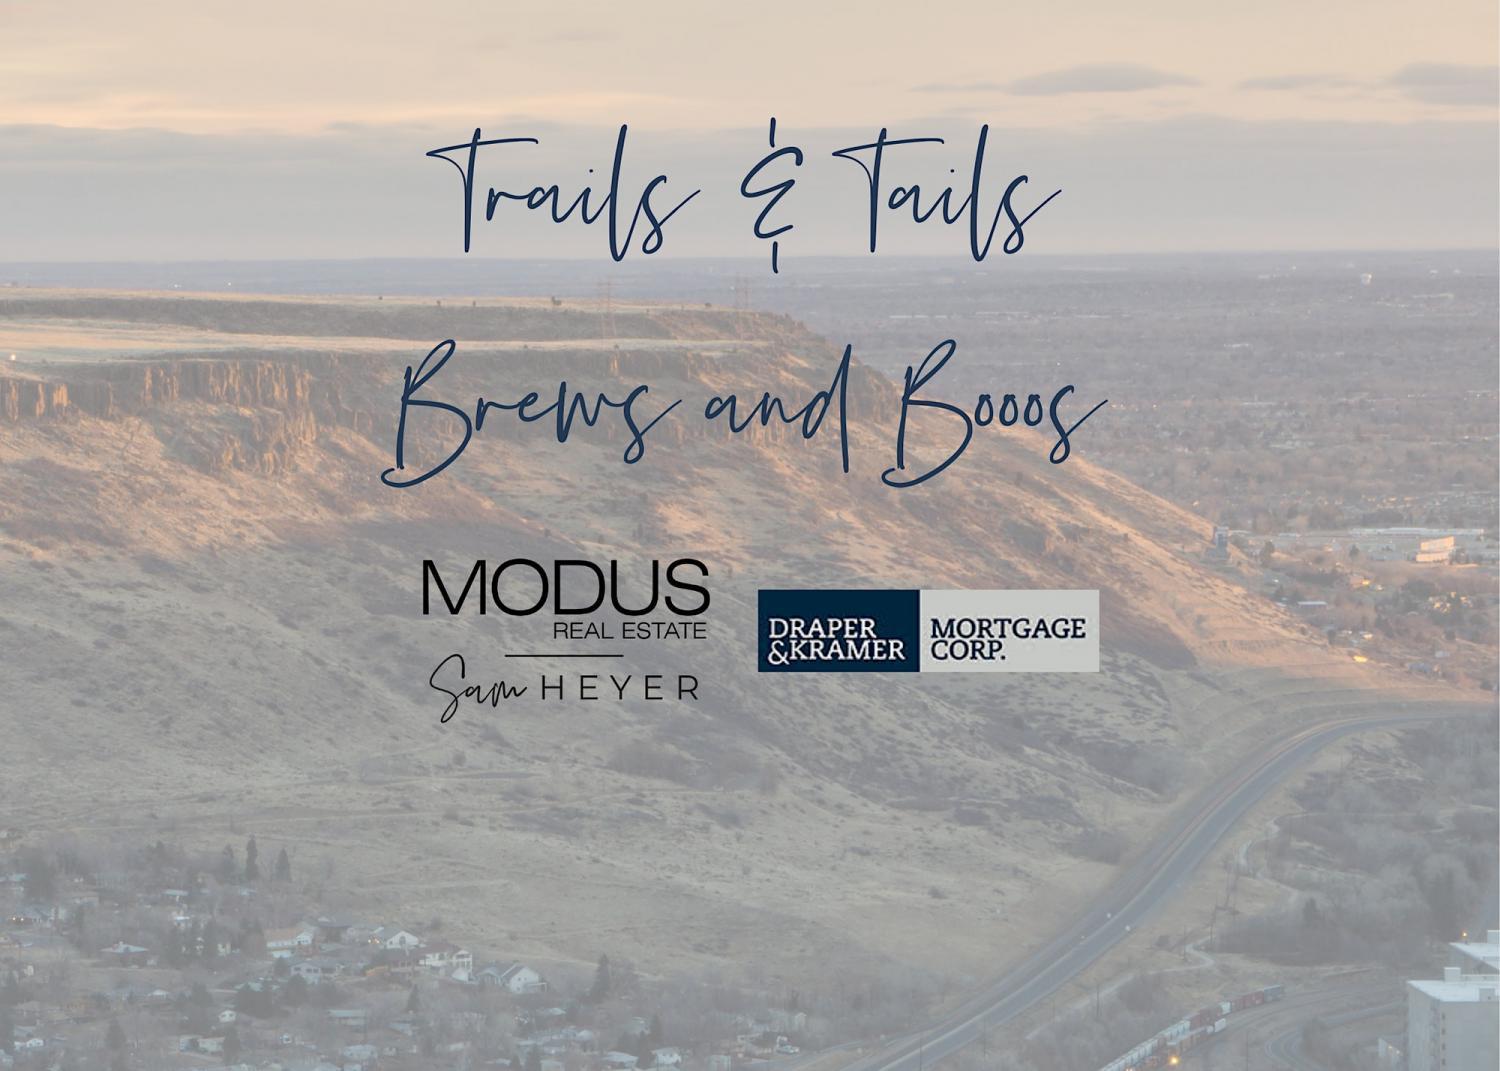 Trails & Tails - Brews & Booos
Sat Oct 15, 11:00 AM - Sat Oct 15, 1:00 PM